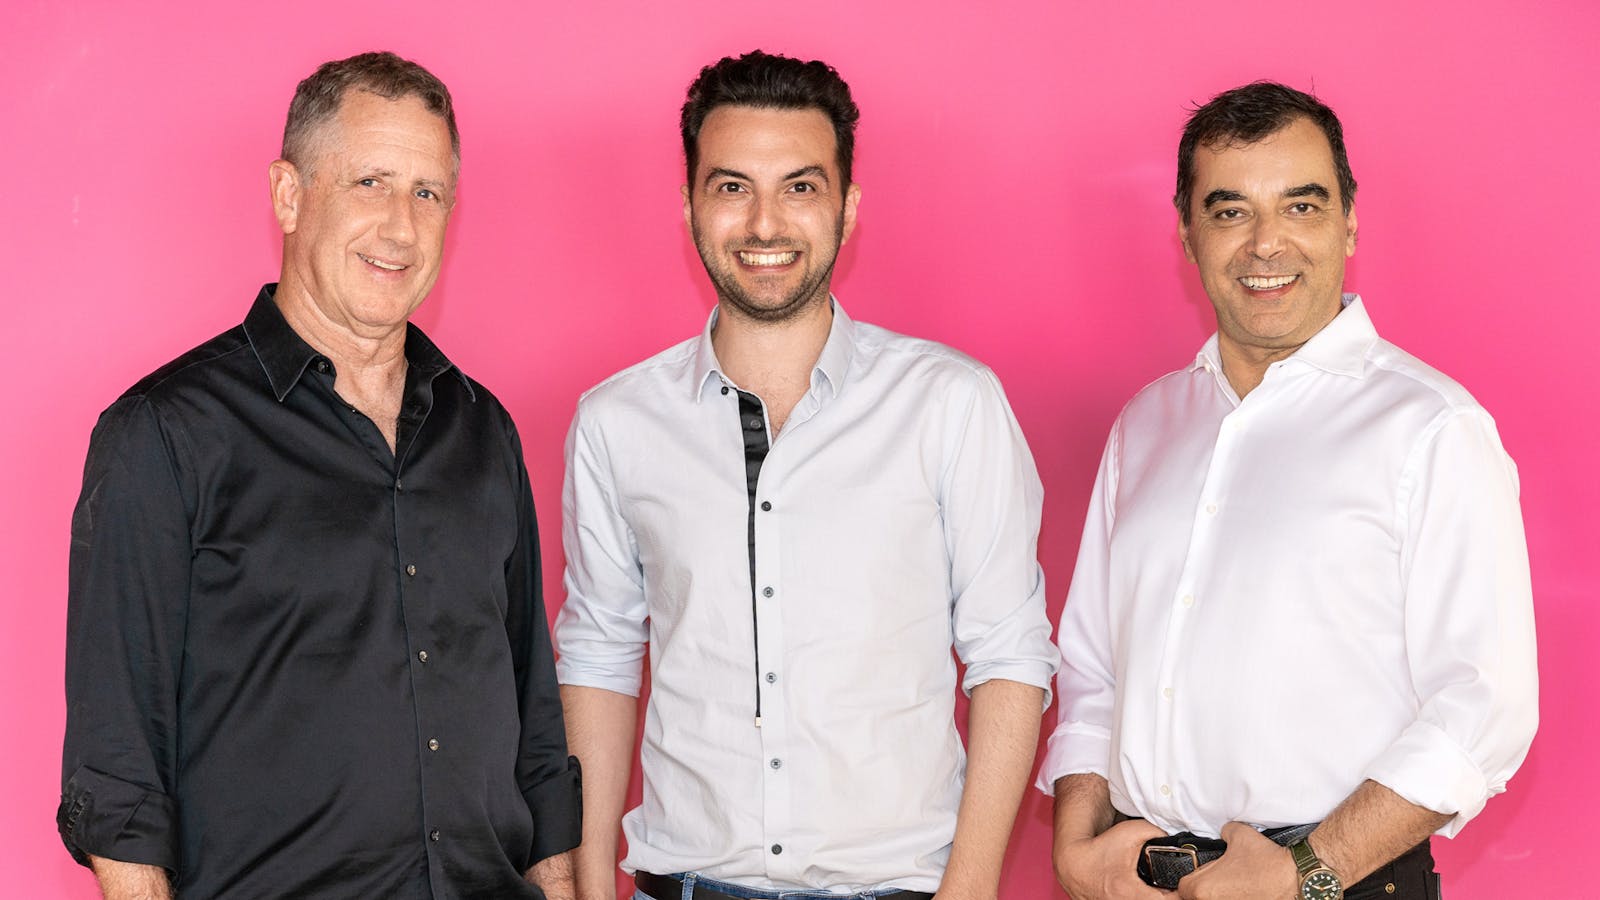 The founders of AI21 Labs. Left to right: Yoav Shoham, Ori Goshen and Amnon Shashua. Photo via AI21 Labs.